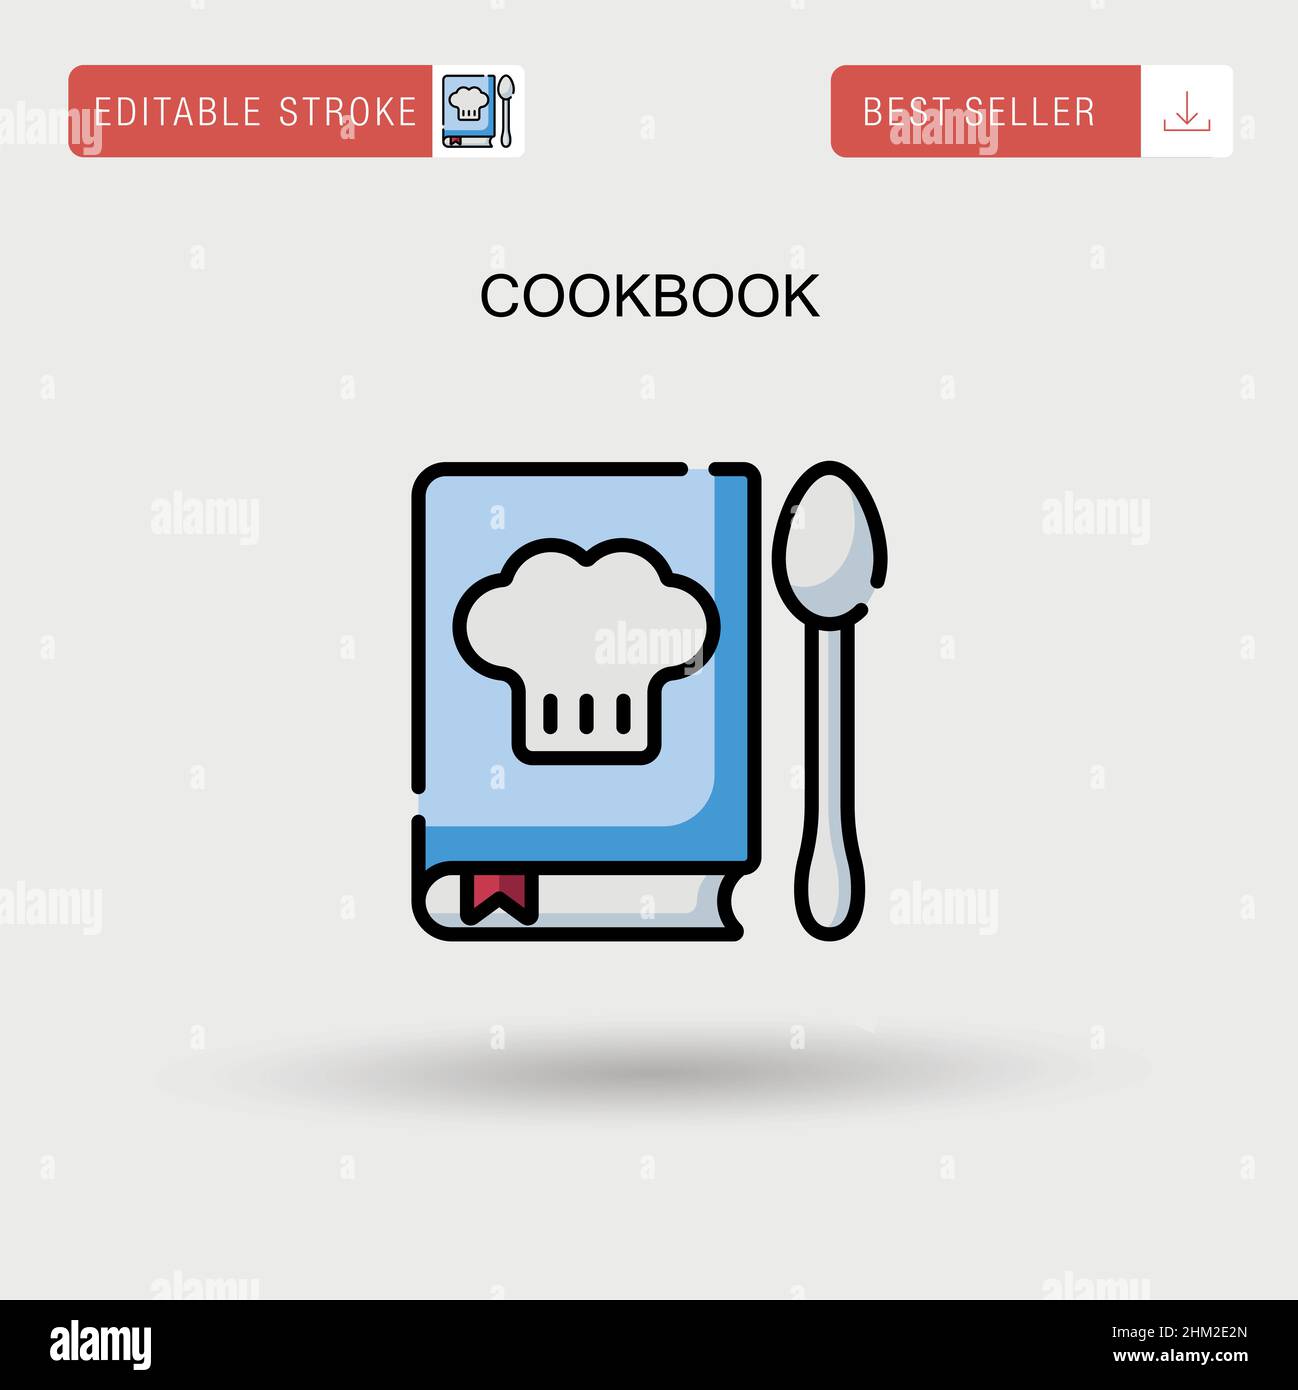 Einfaches Vektorsymbol für Kochbücher. Stock Vektor